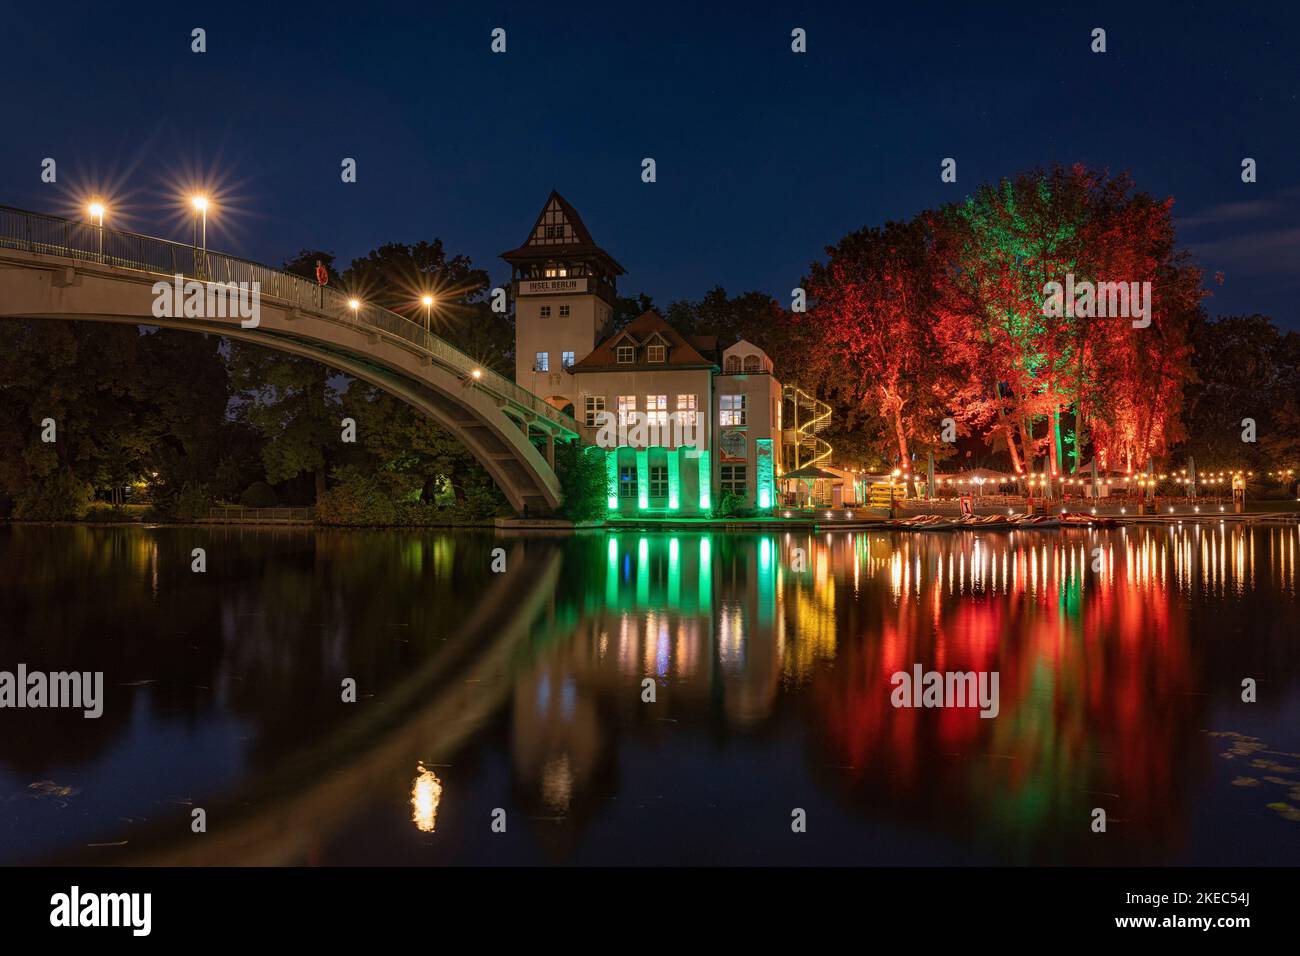 Island of youth and abbey bridge at night. Berlin, Germany. Stock Photo